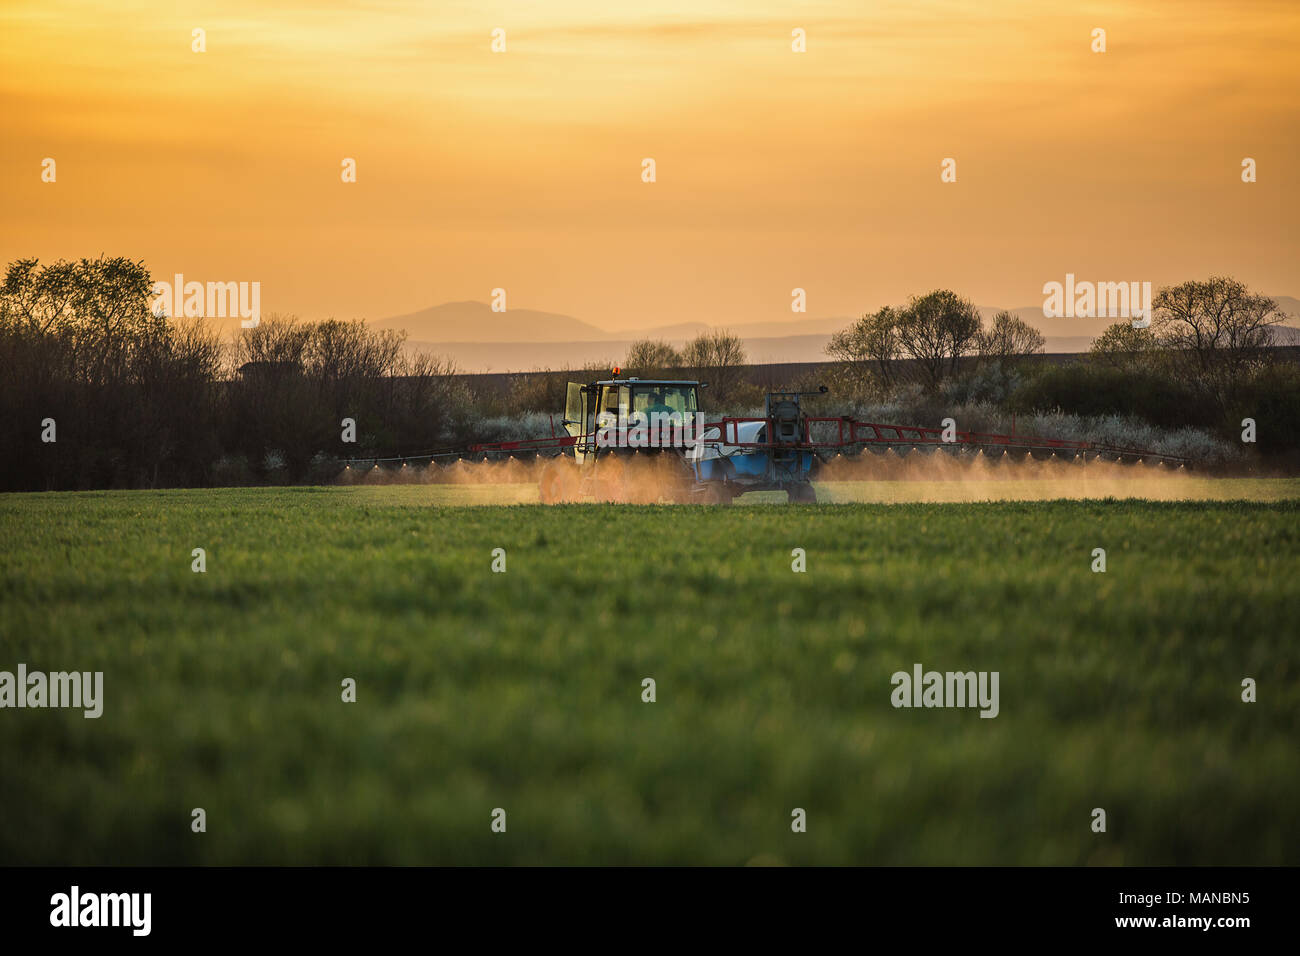 Traktor spritzen Weizenfeld mit Feldspritze, Sonnenuntergang geschossen Stockfoto